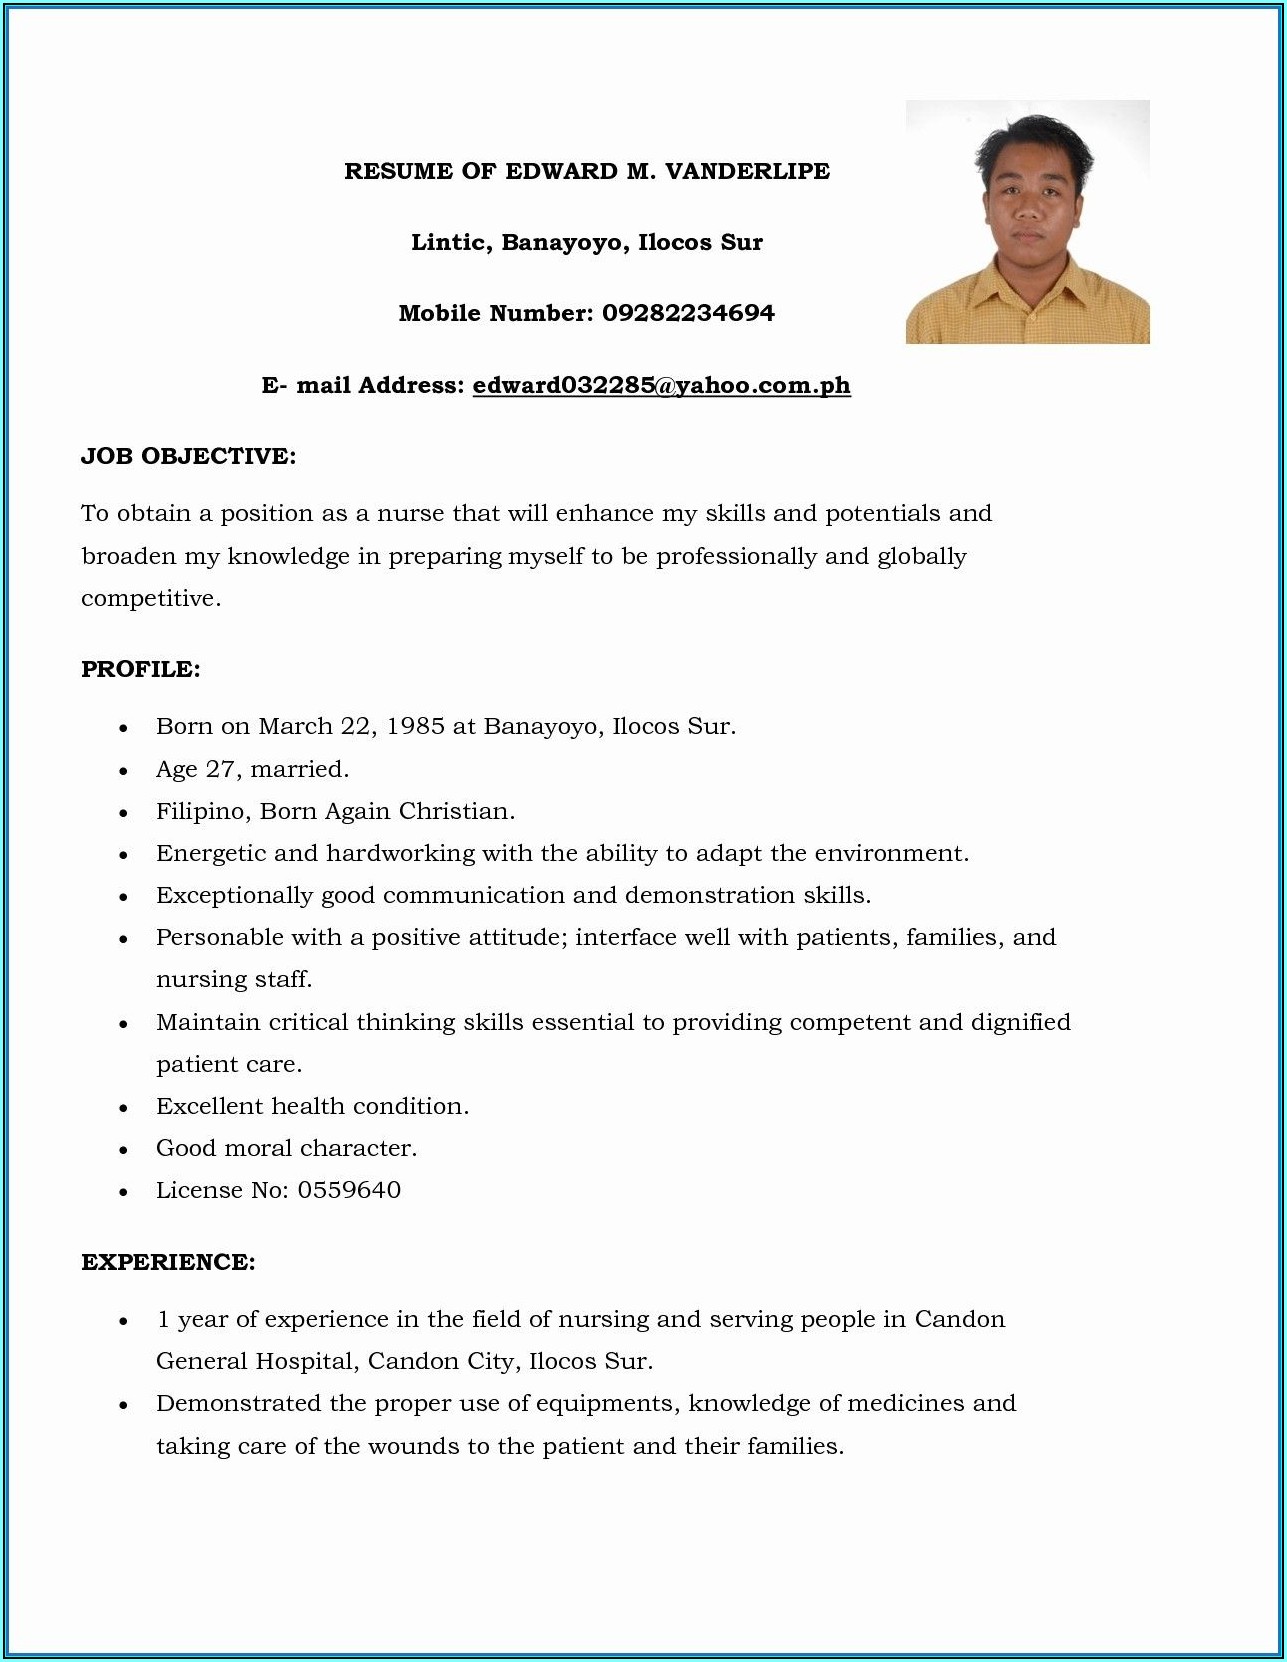 Resume Format For Nursing Staff